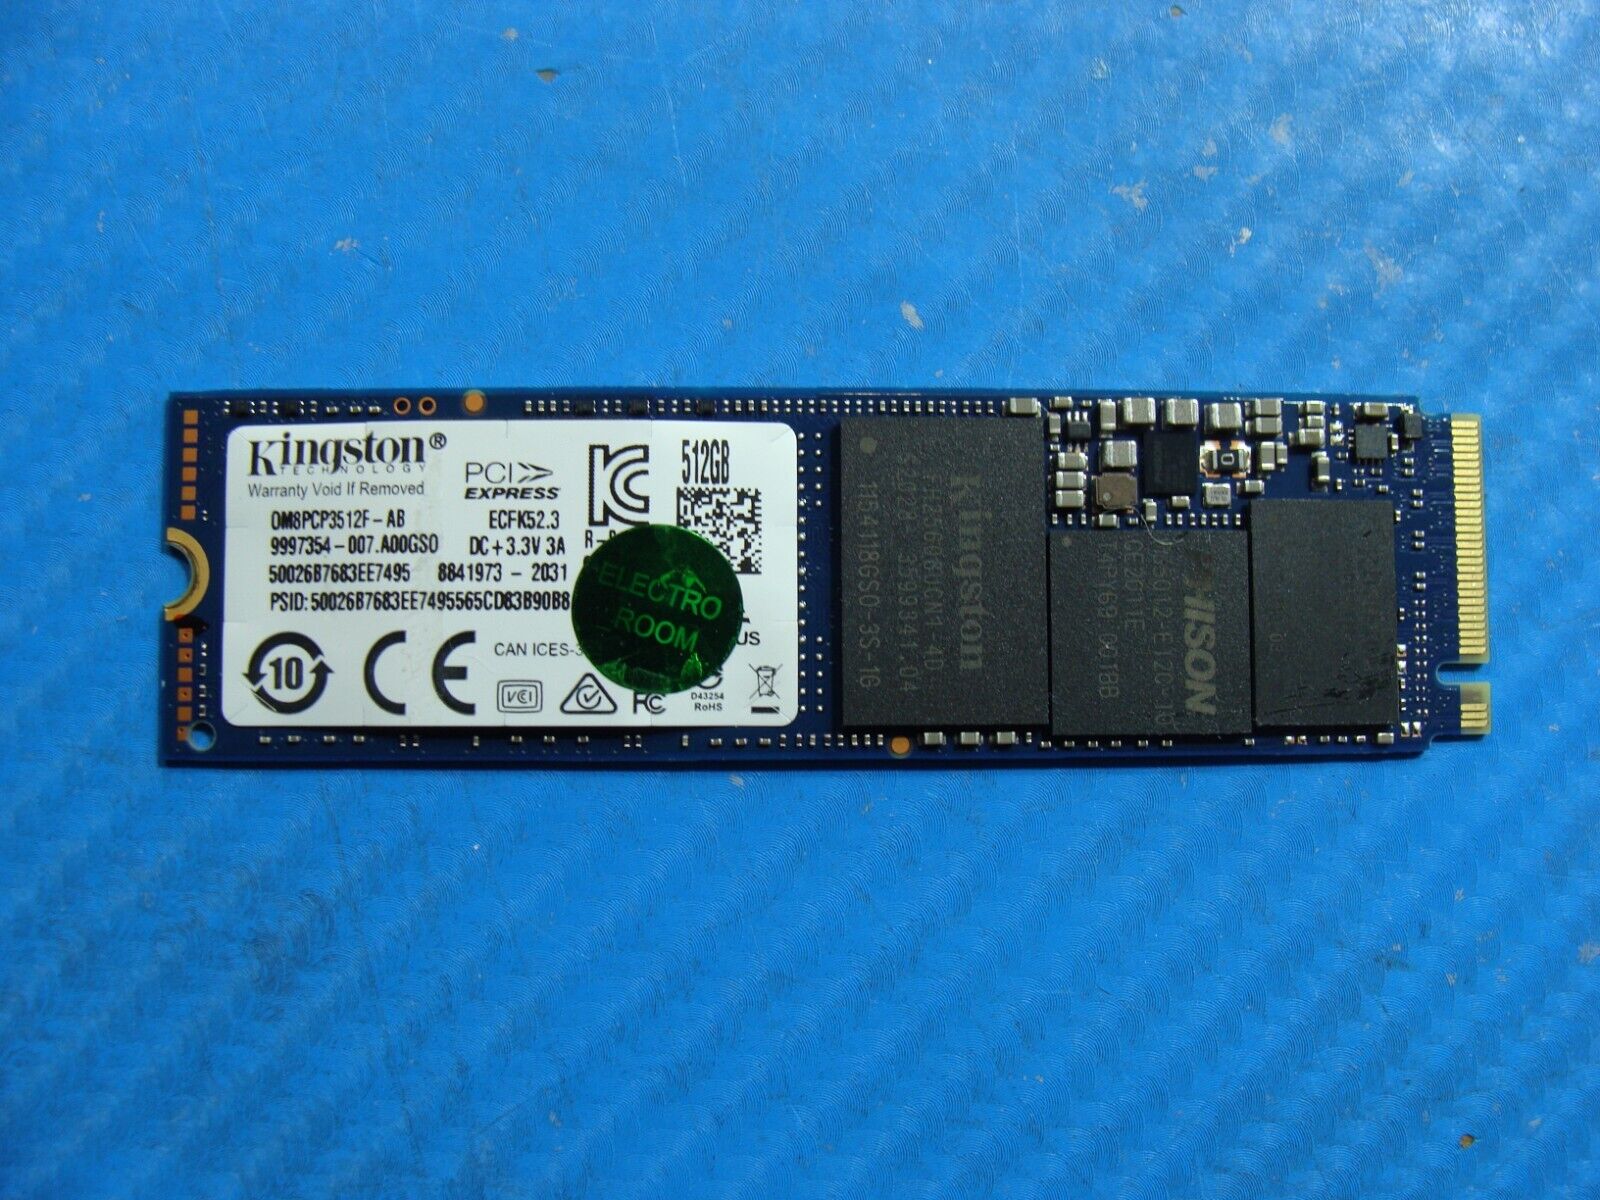 Asus M712DA Kingston 512GB NVMe M.2 SSD Solid State Drive OM8PCP3512F-AB